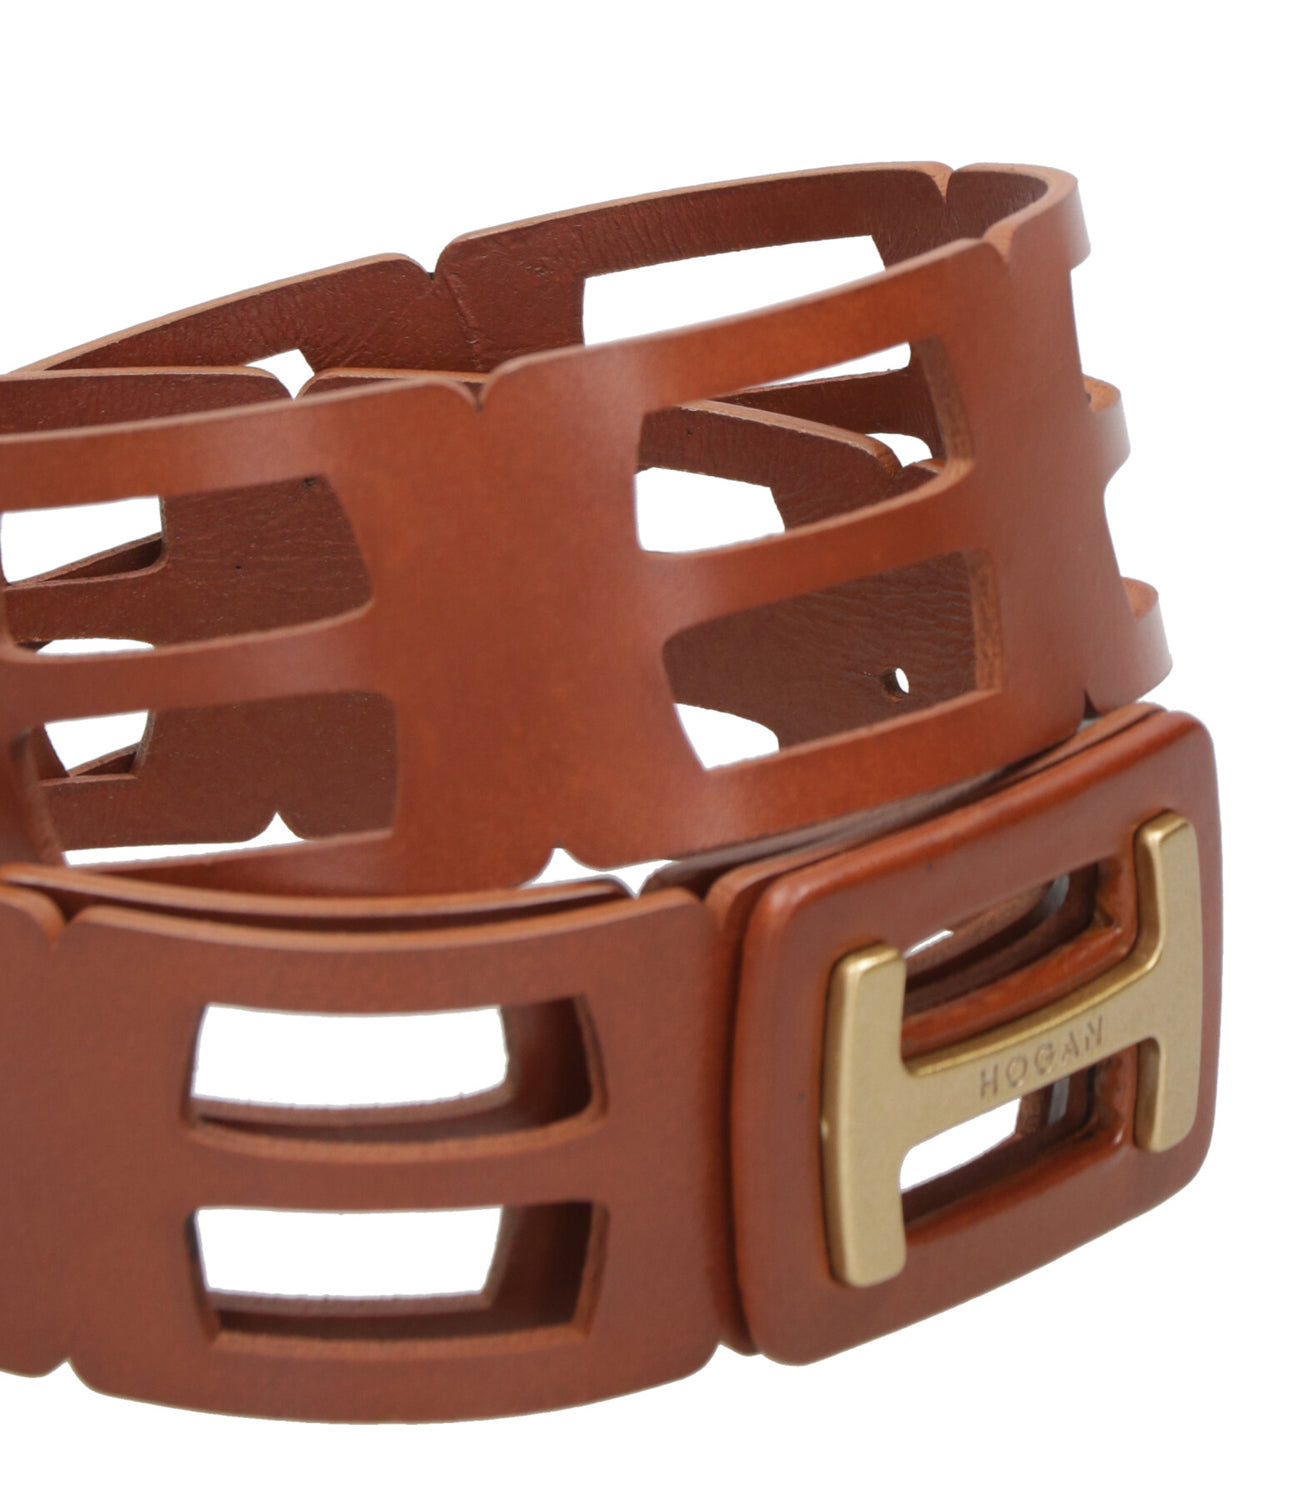 Hogan | Leather Belt